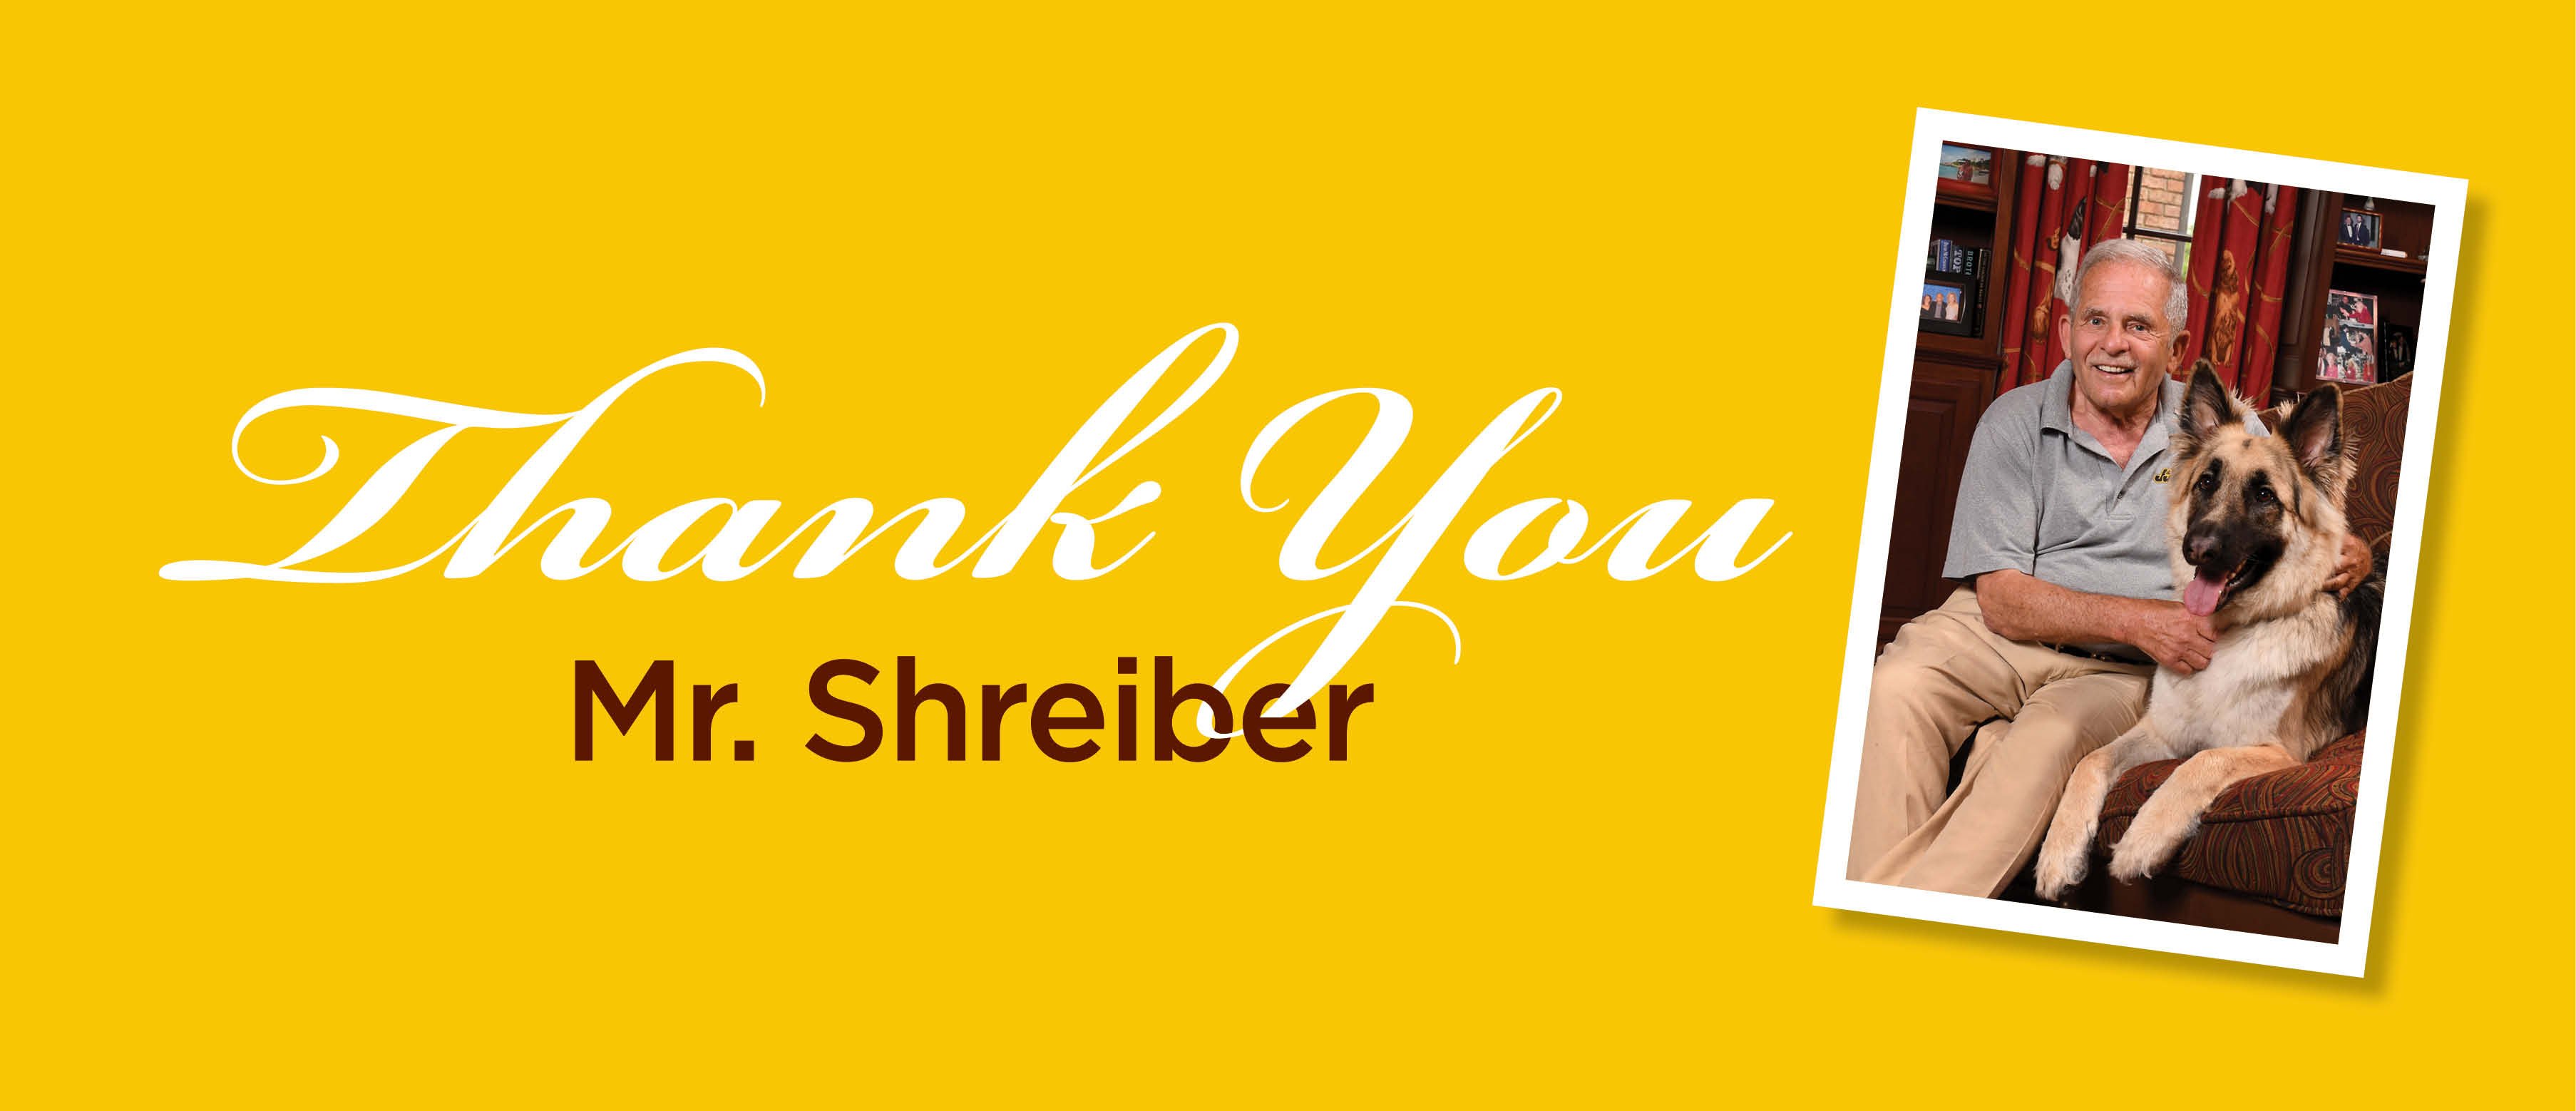 Thank you Mr. Shreiber